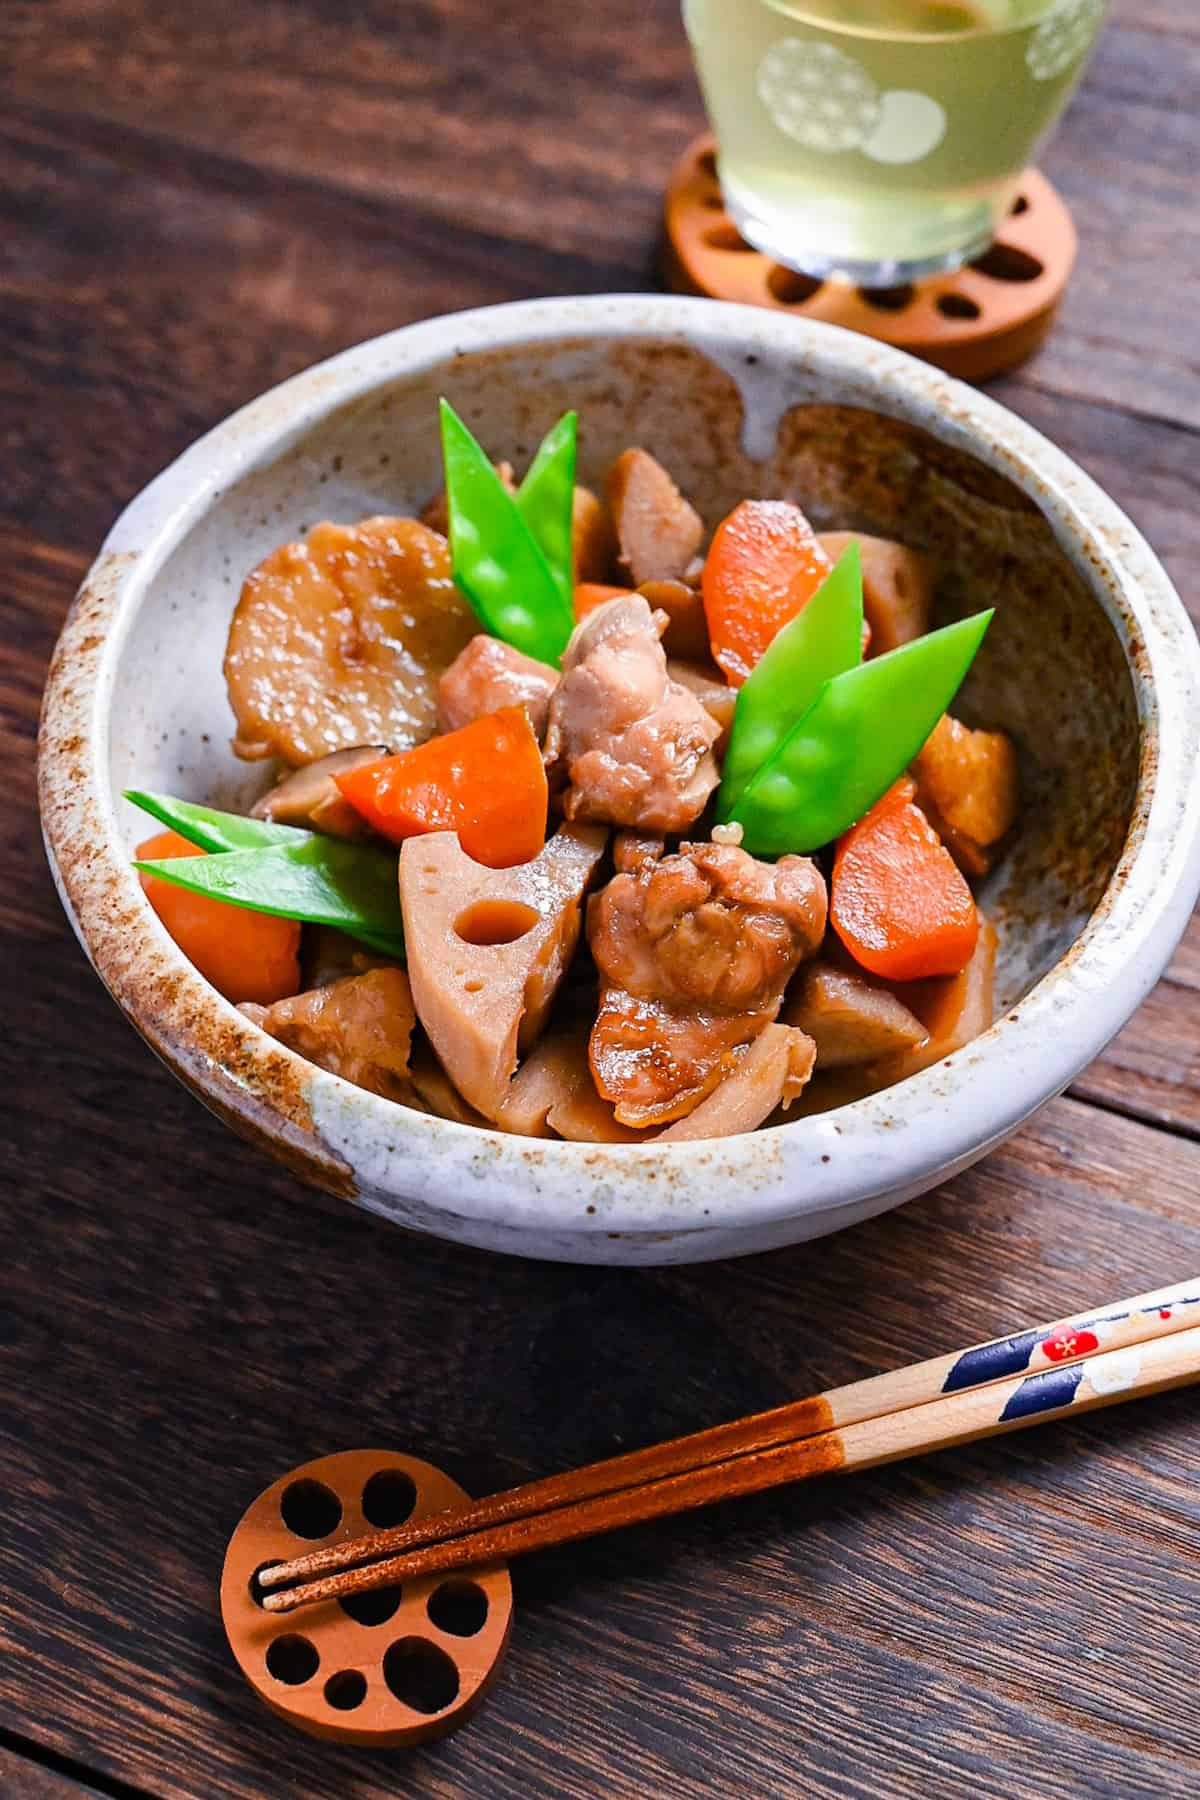 Chikuzenni (Japanese simmered chicken and vegetables) served in a mottled beige bowl